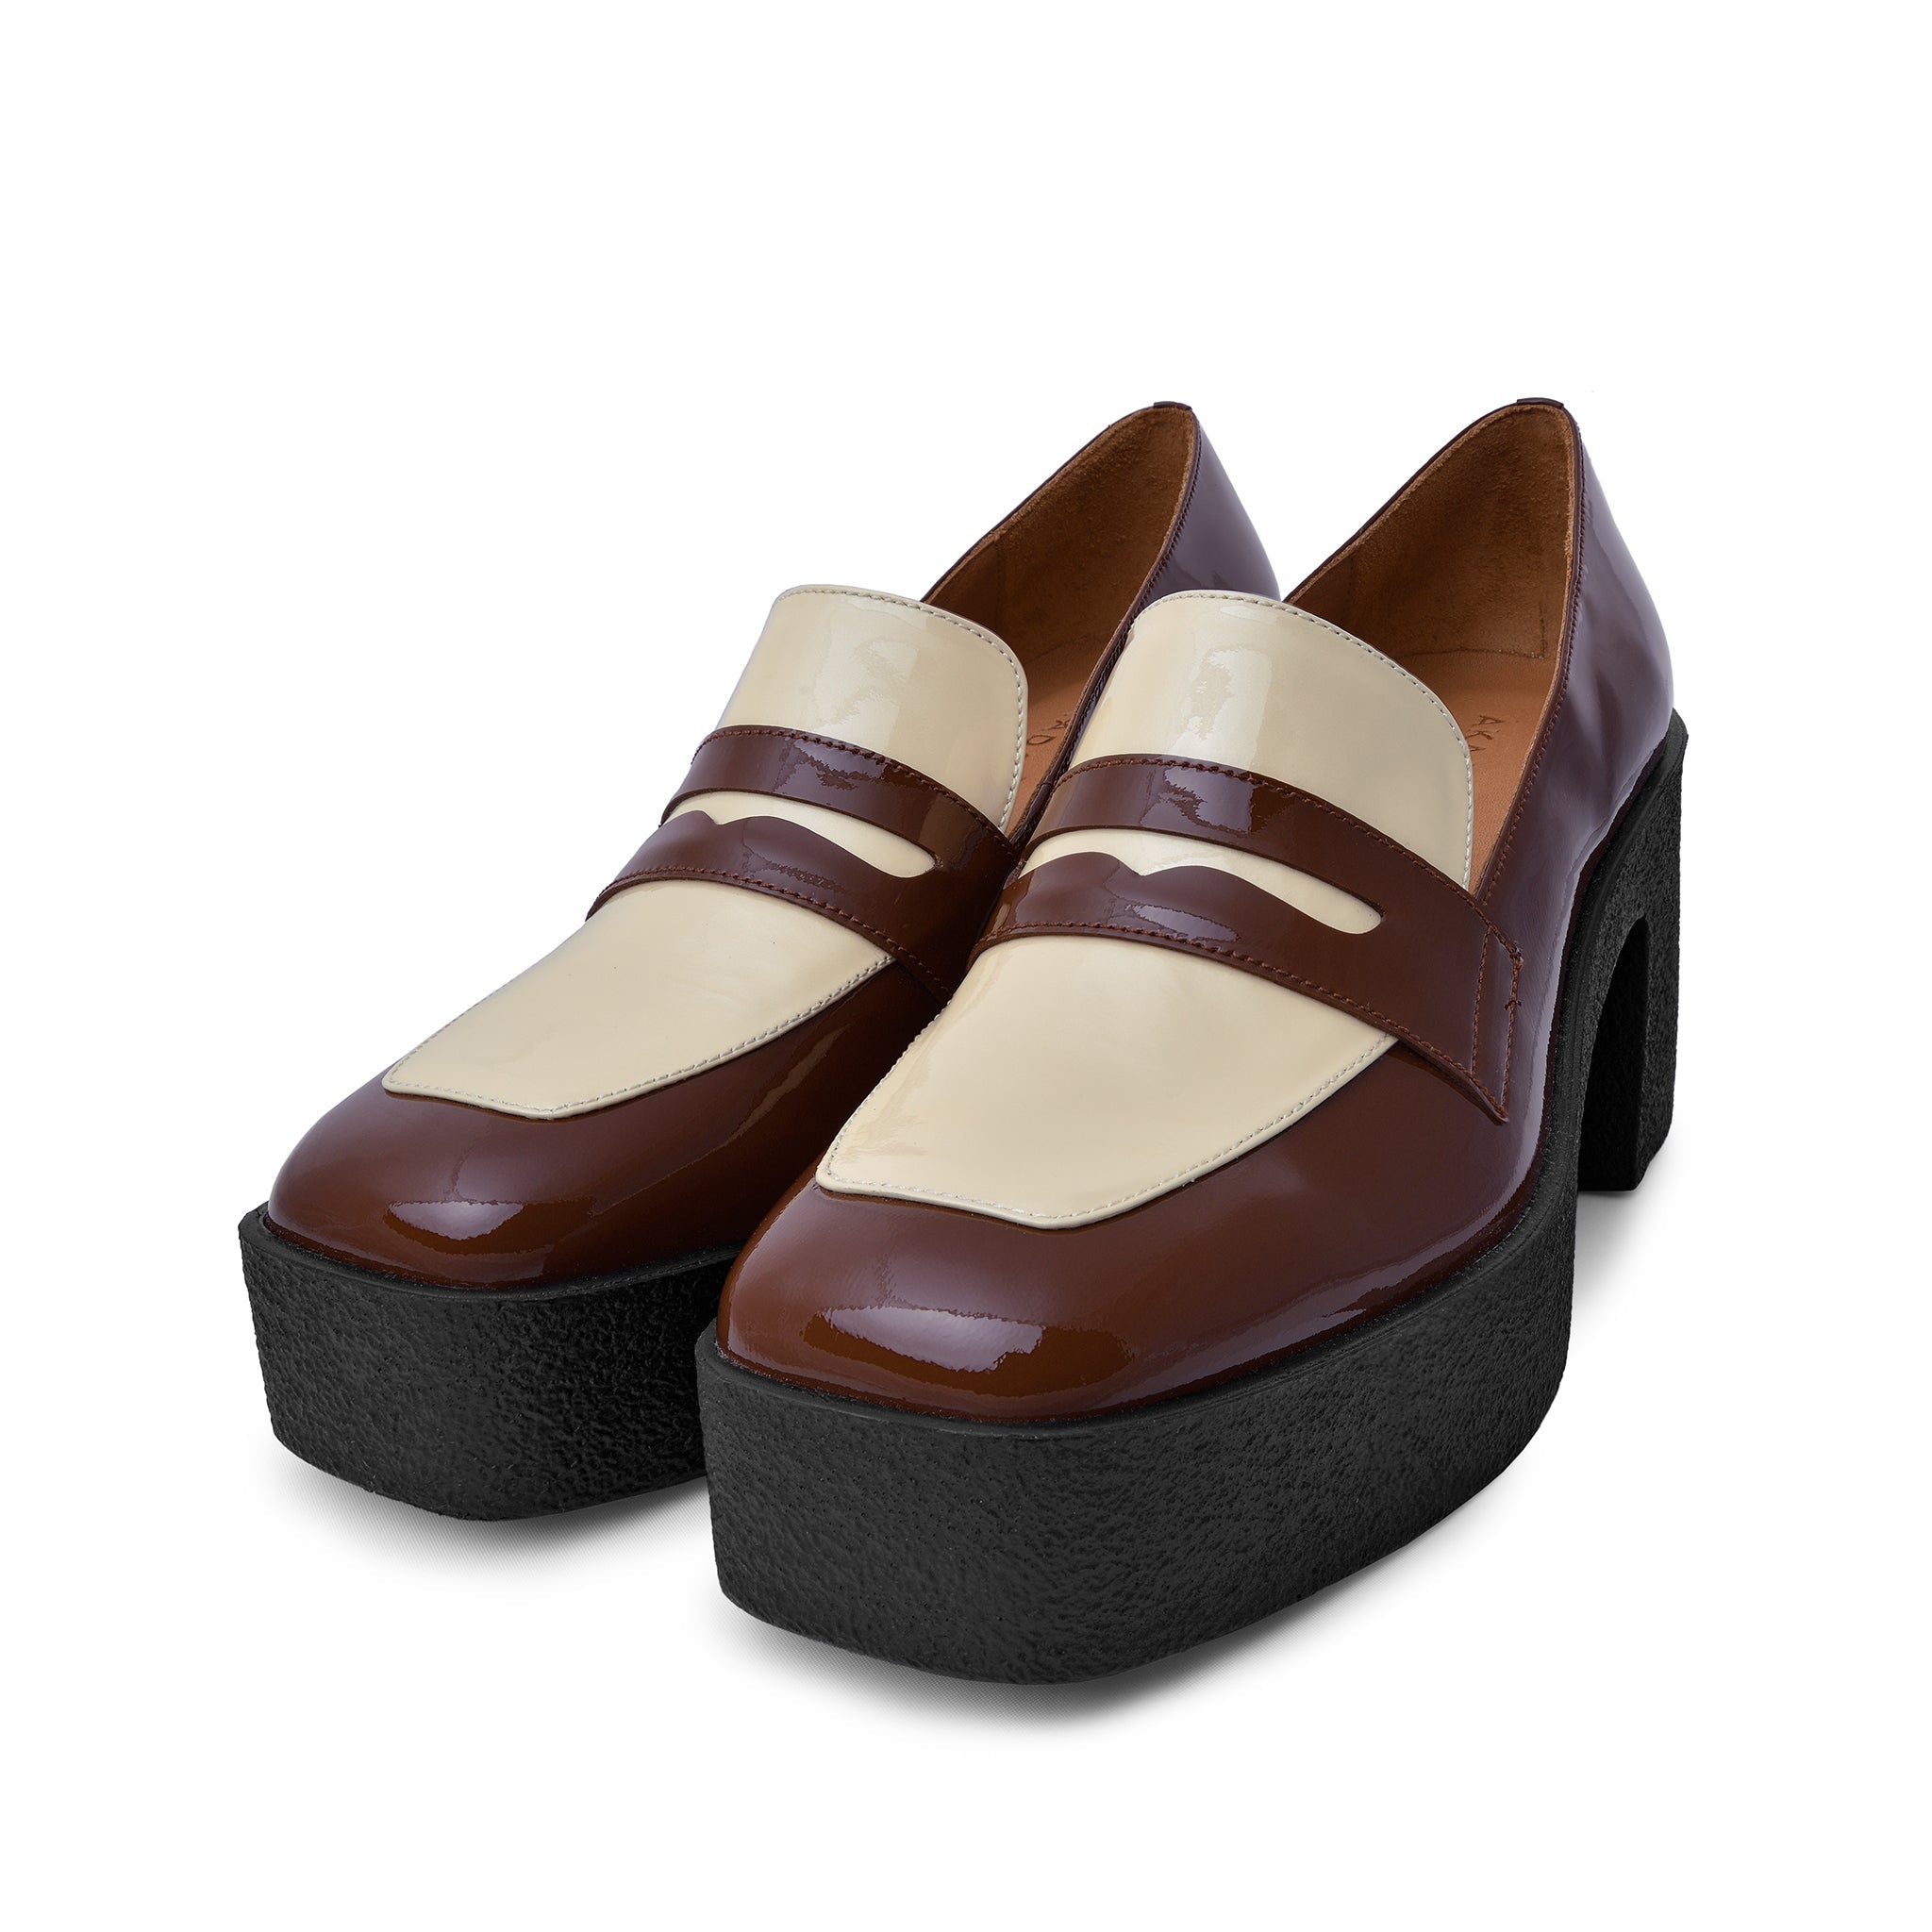 Yoko Caramel Cream Patent Leather Chunky Loafers 21031-01-05 - 7